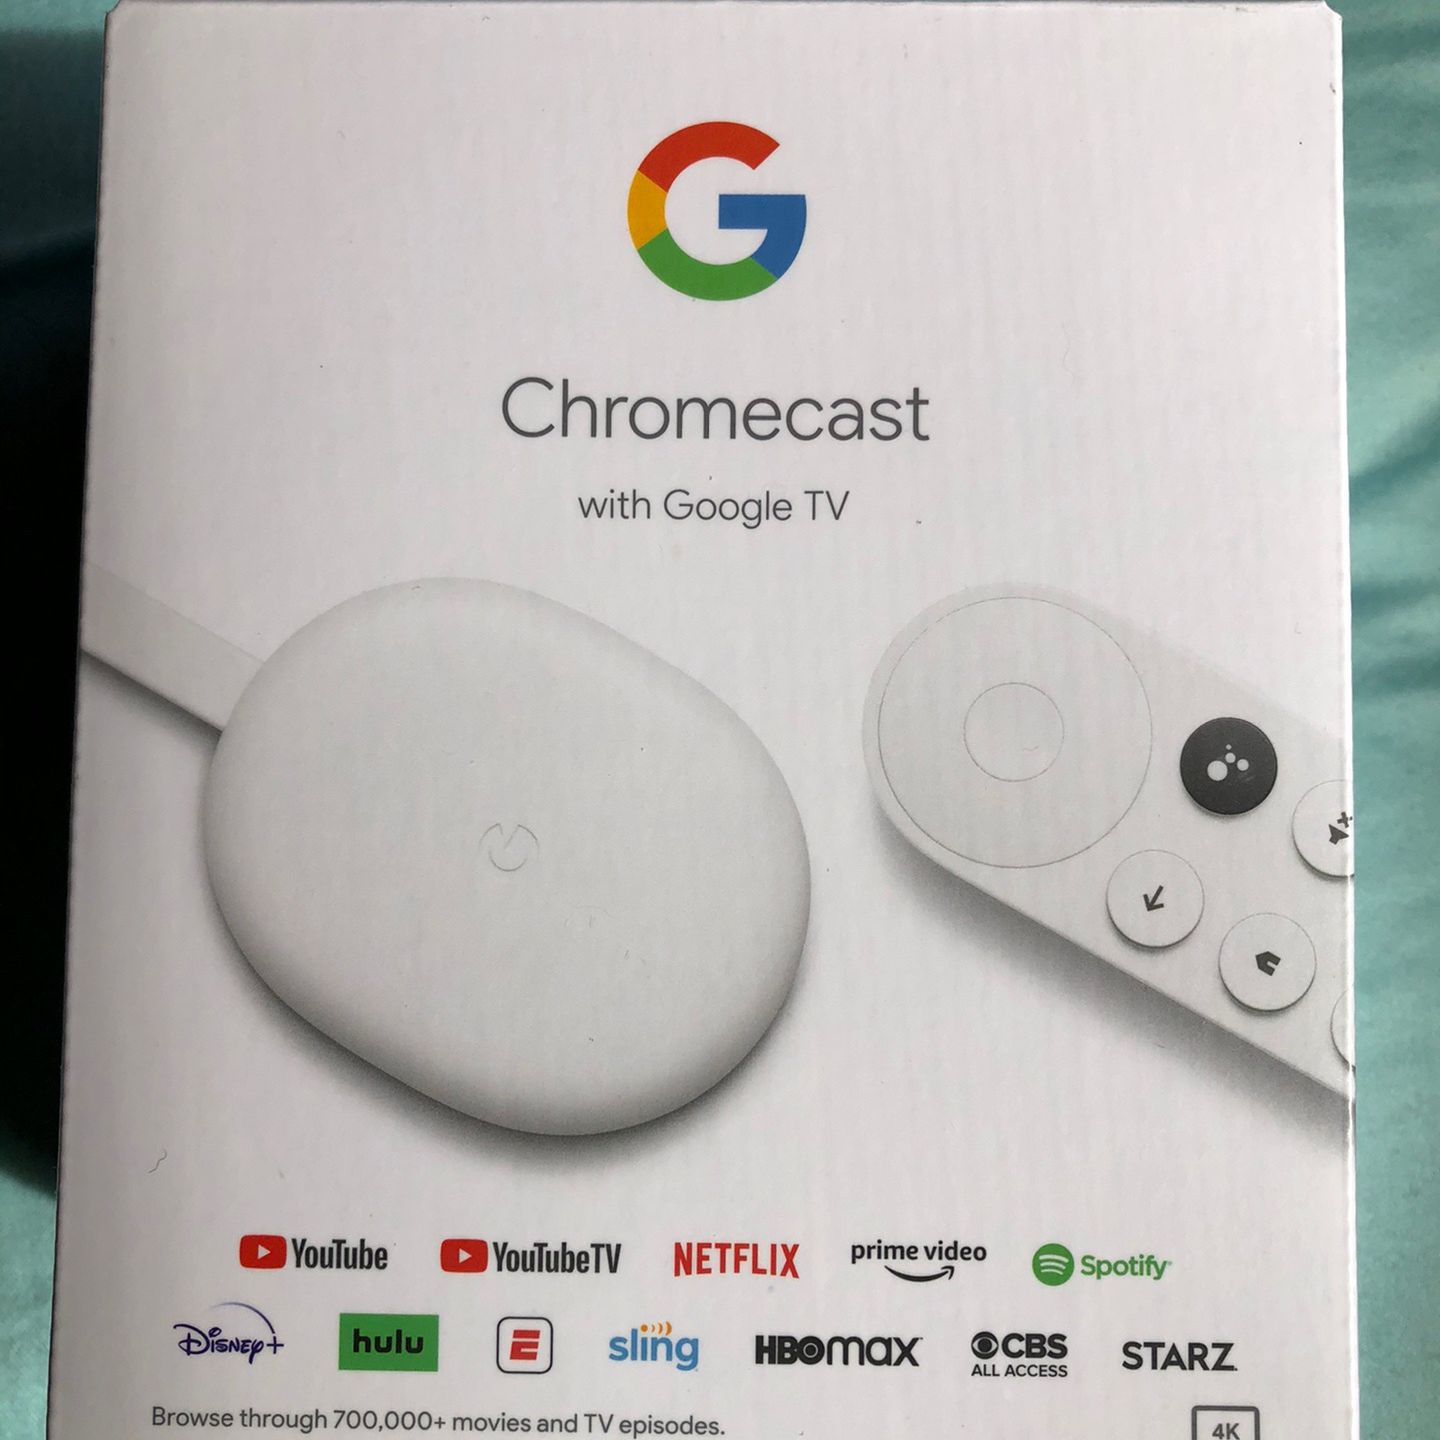 Google Chromcast W Gogle TV Remote Sealed